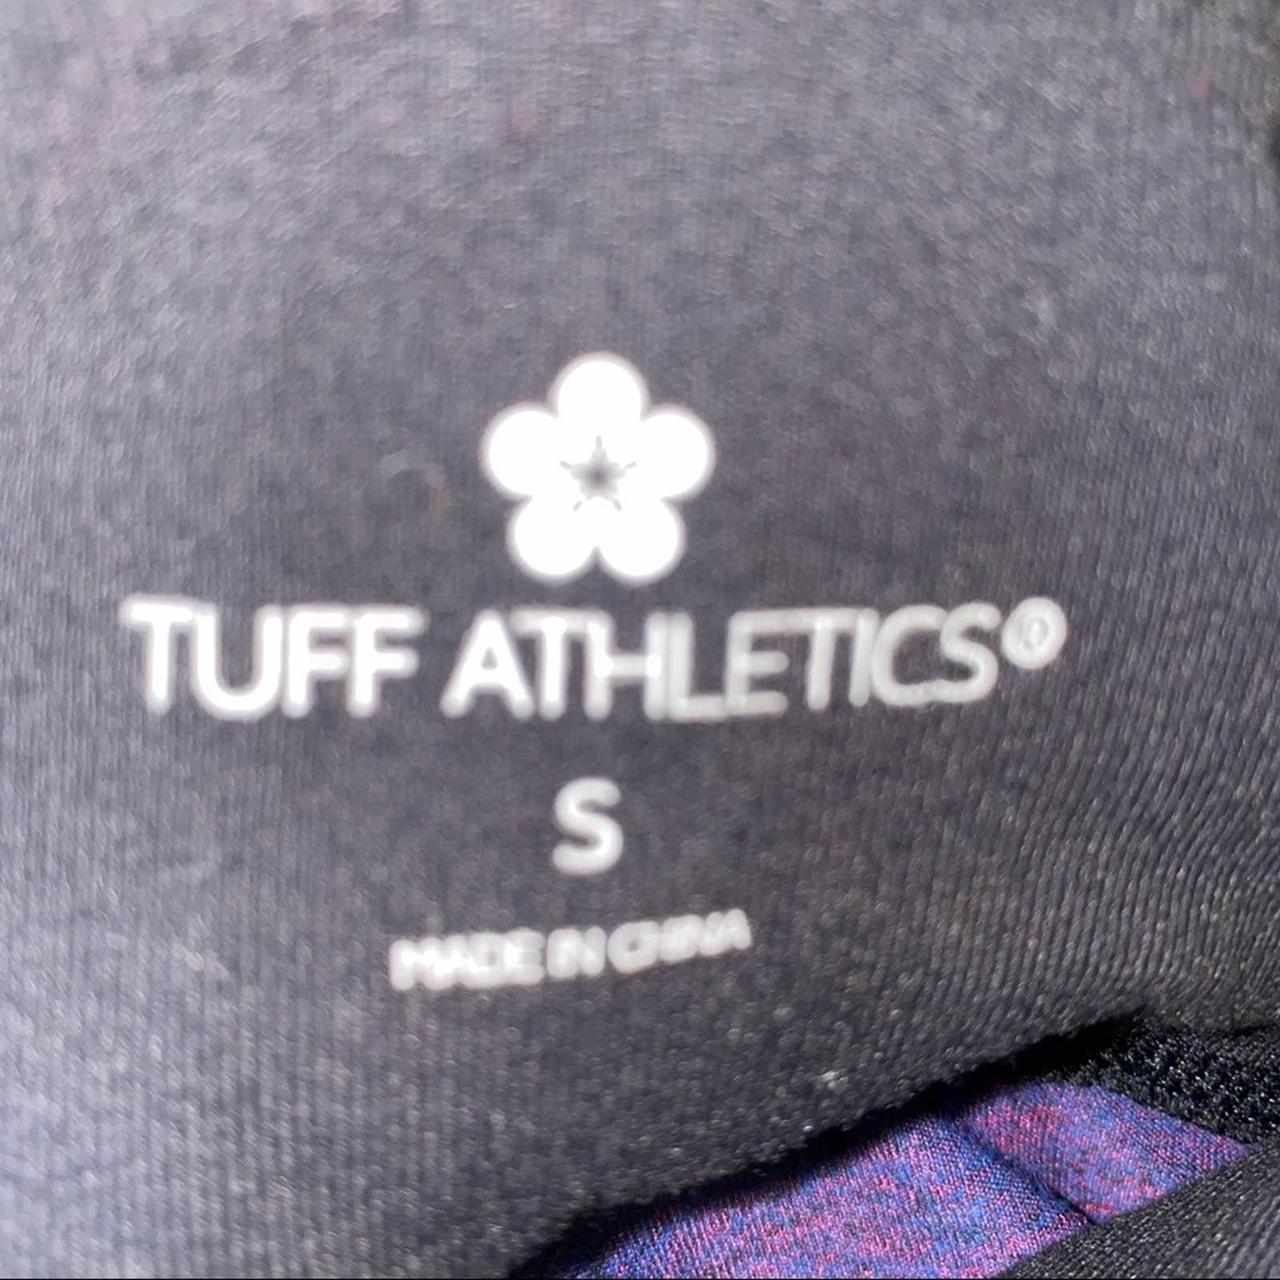 Tuff Athletics Cropped Athleisure Multicolored - Depop